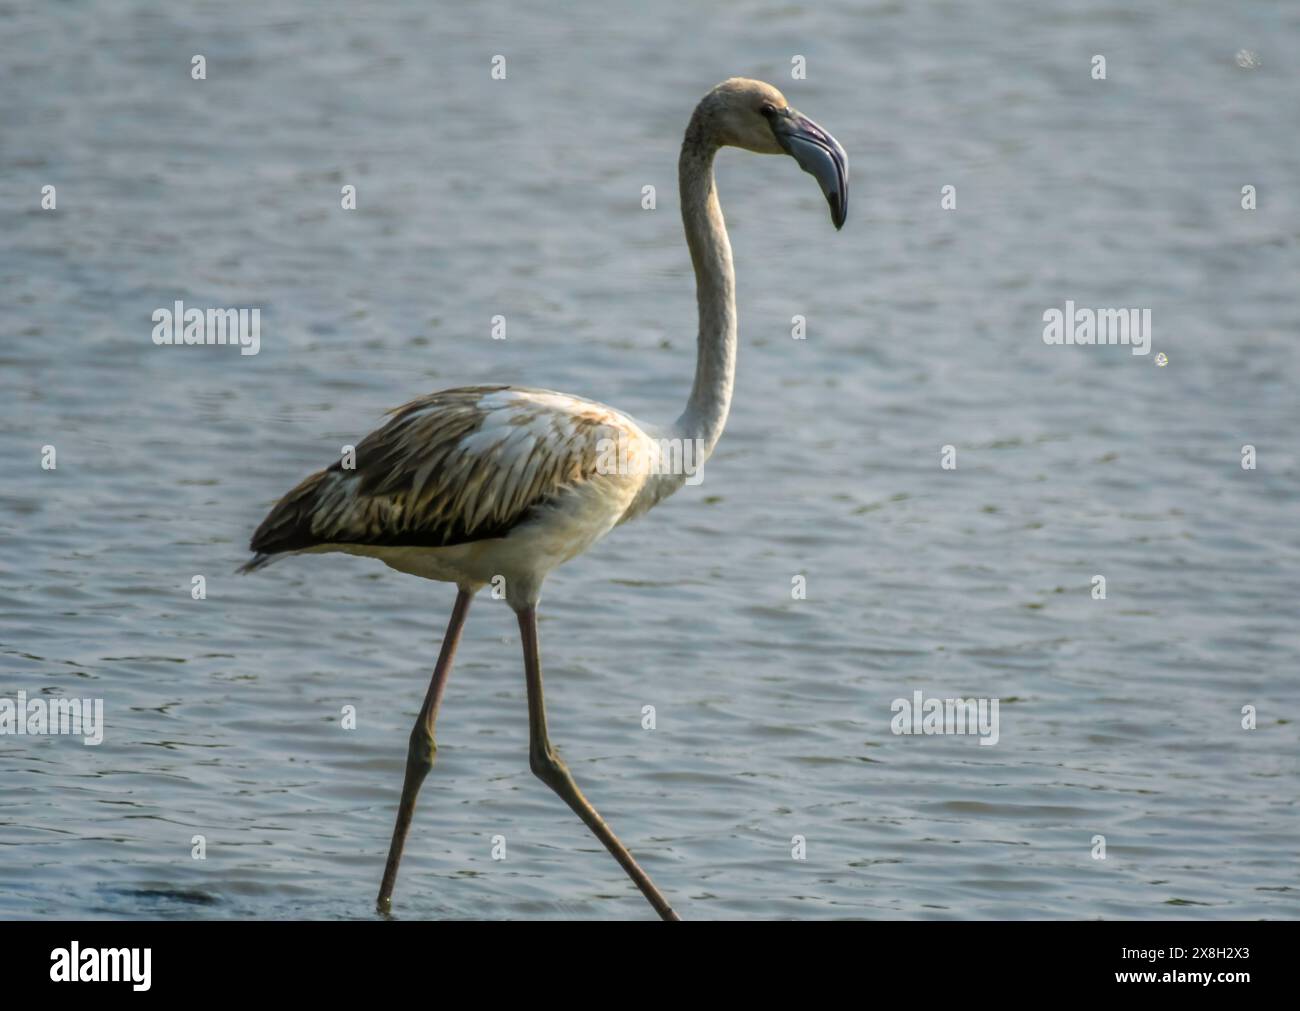 Thane district also known as flamingo city in Maharashtra India Stock Photo